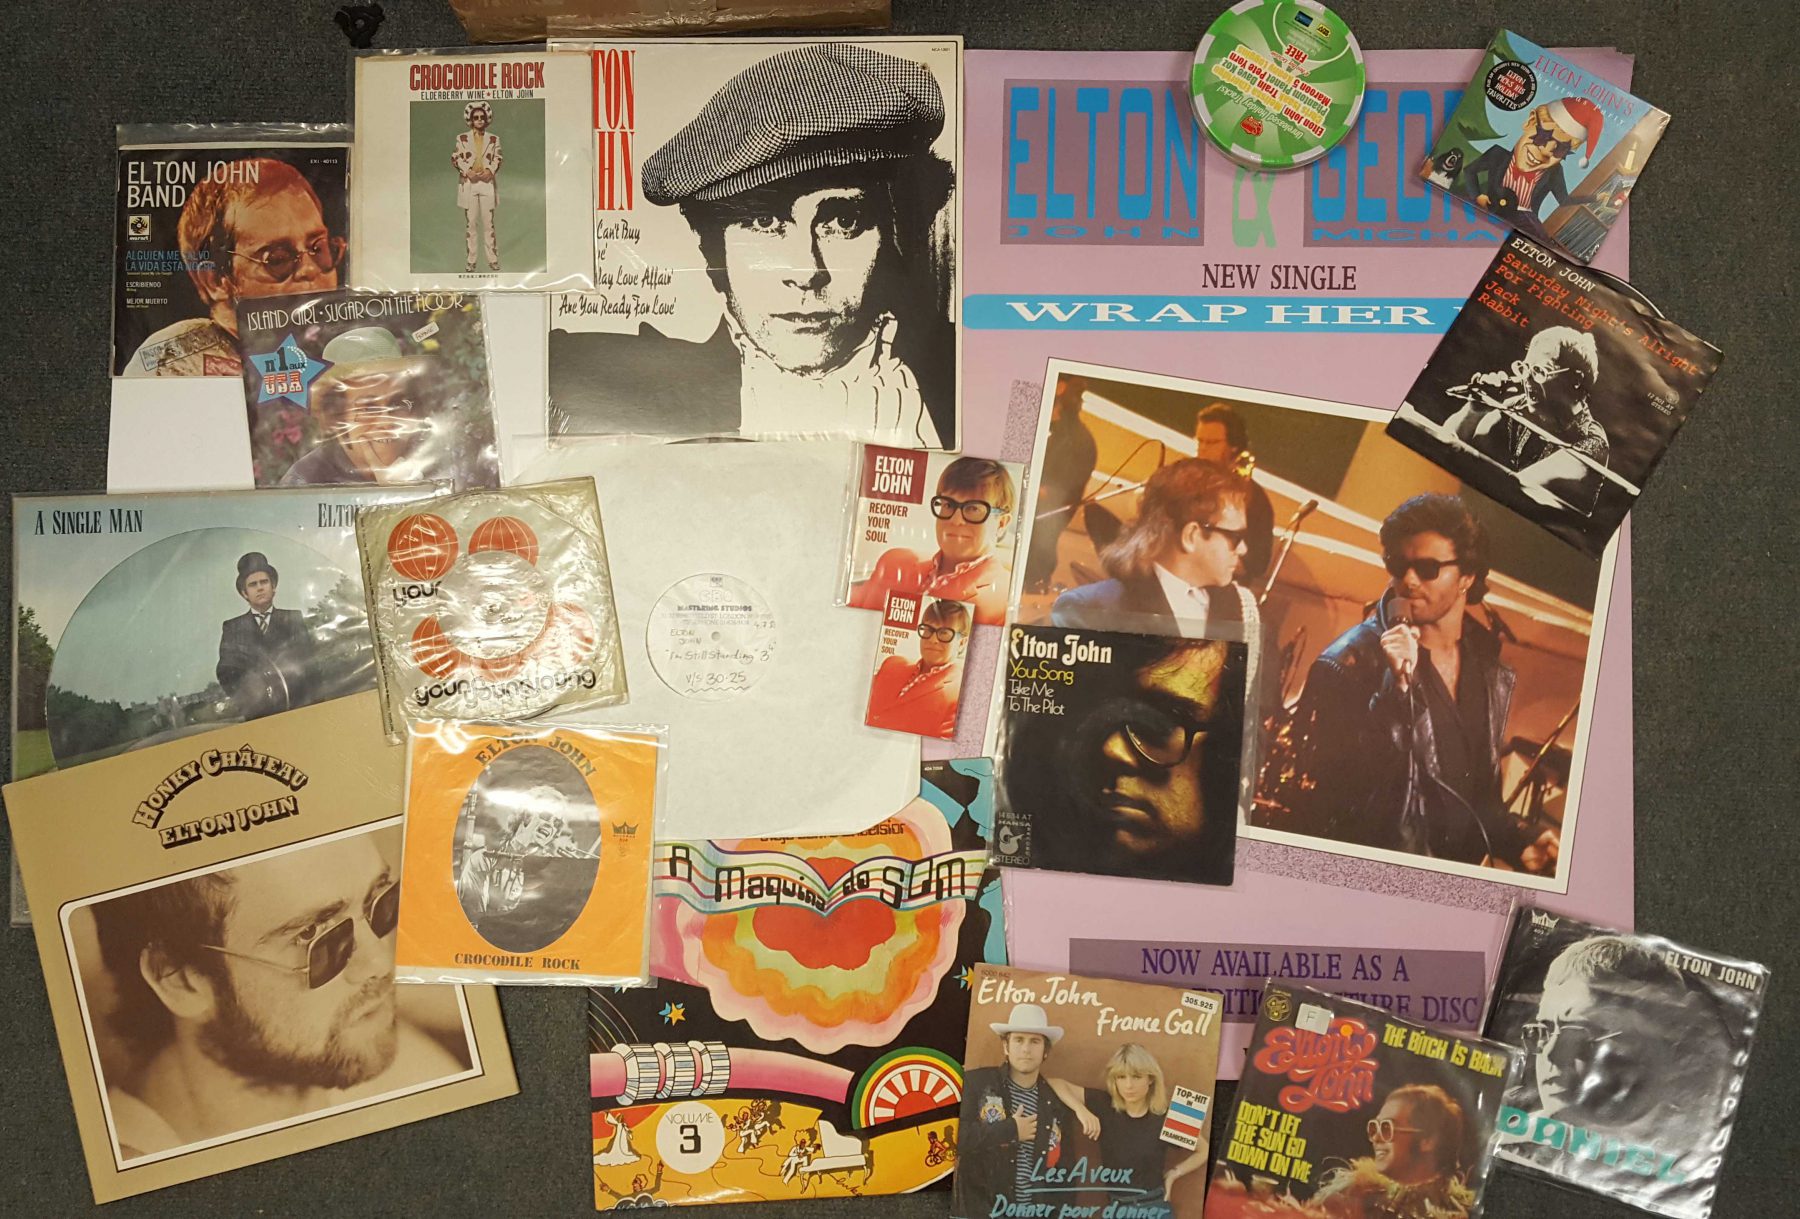 Elton John collection of rare Vinyl & CDs has just landed at eil.com ...